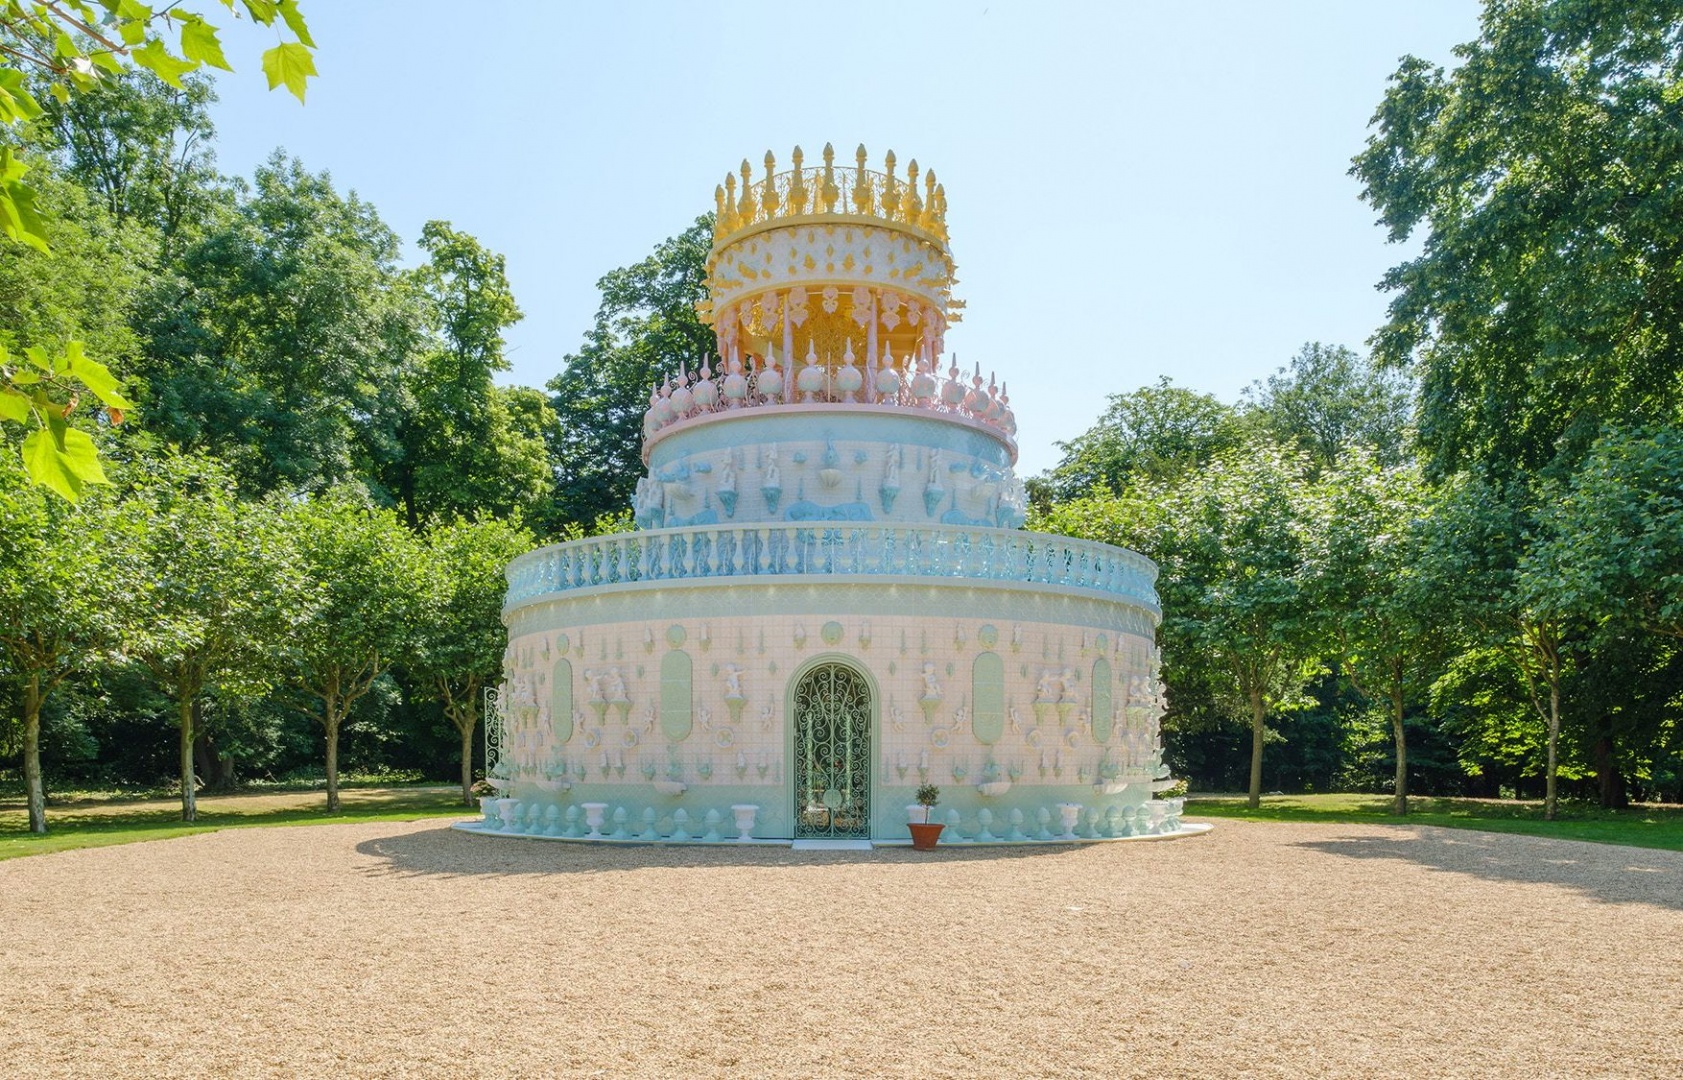 Жоана Вашконселуш создала павильон в виде свадебного торта